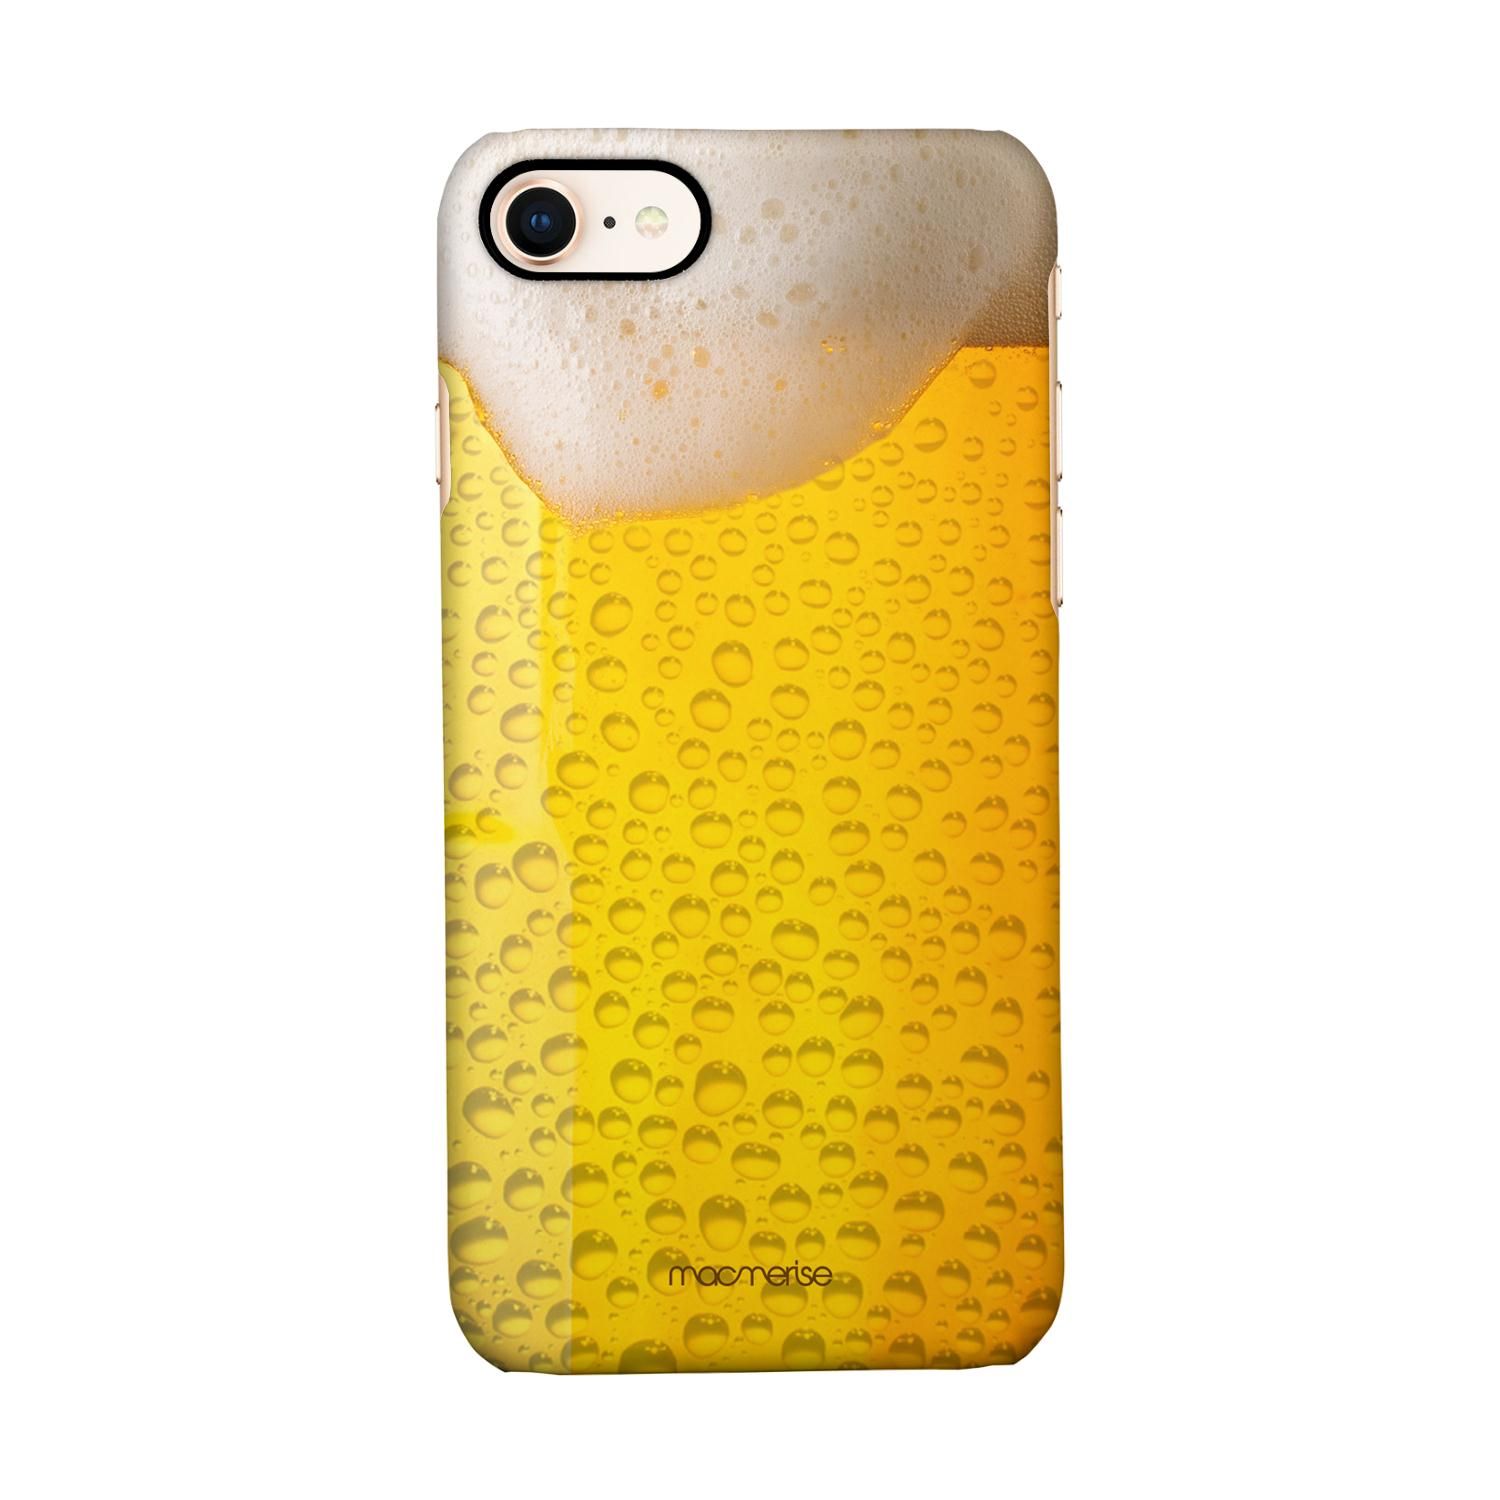 Buy Chug It - Sleek Phone Case for iPhone 8 Online